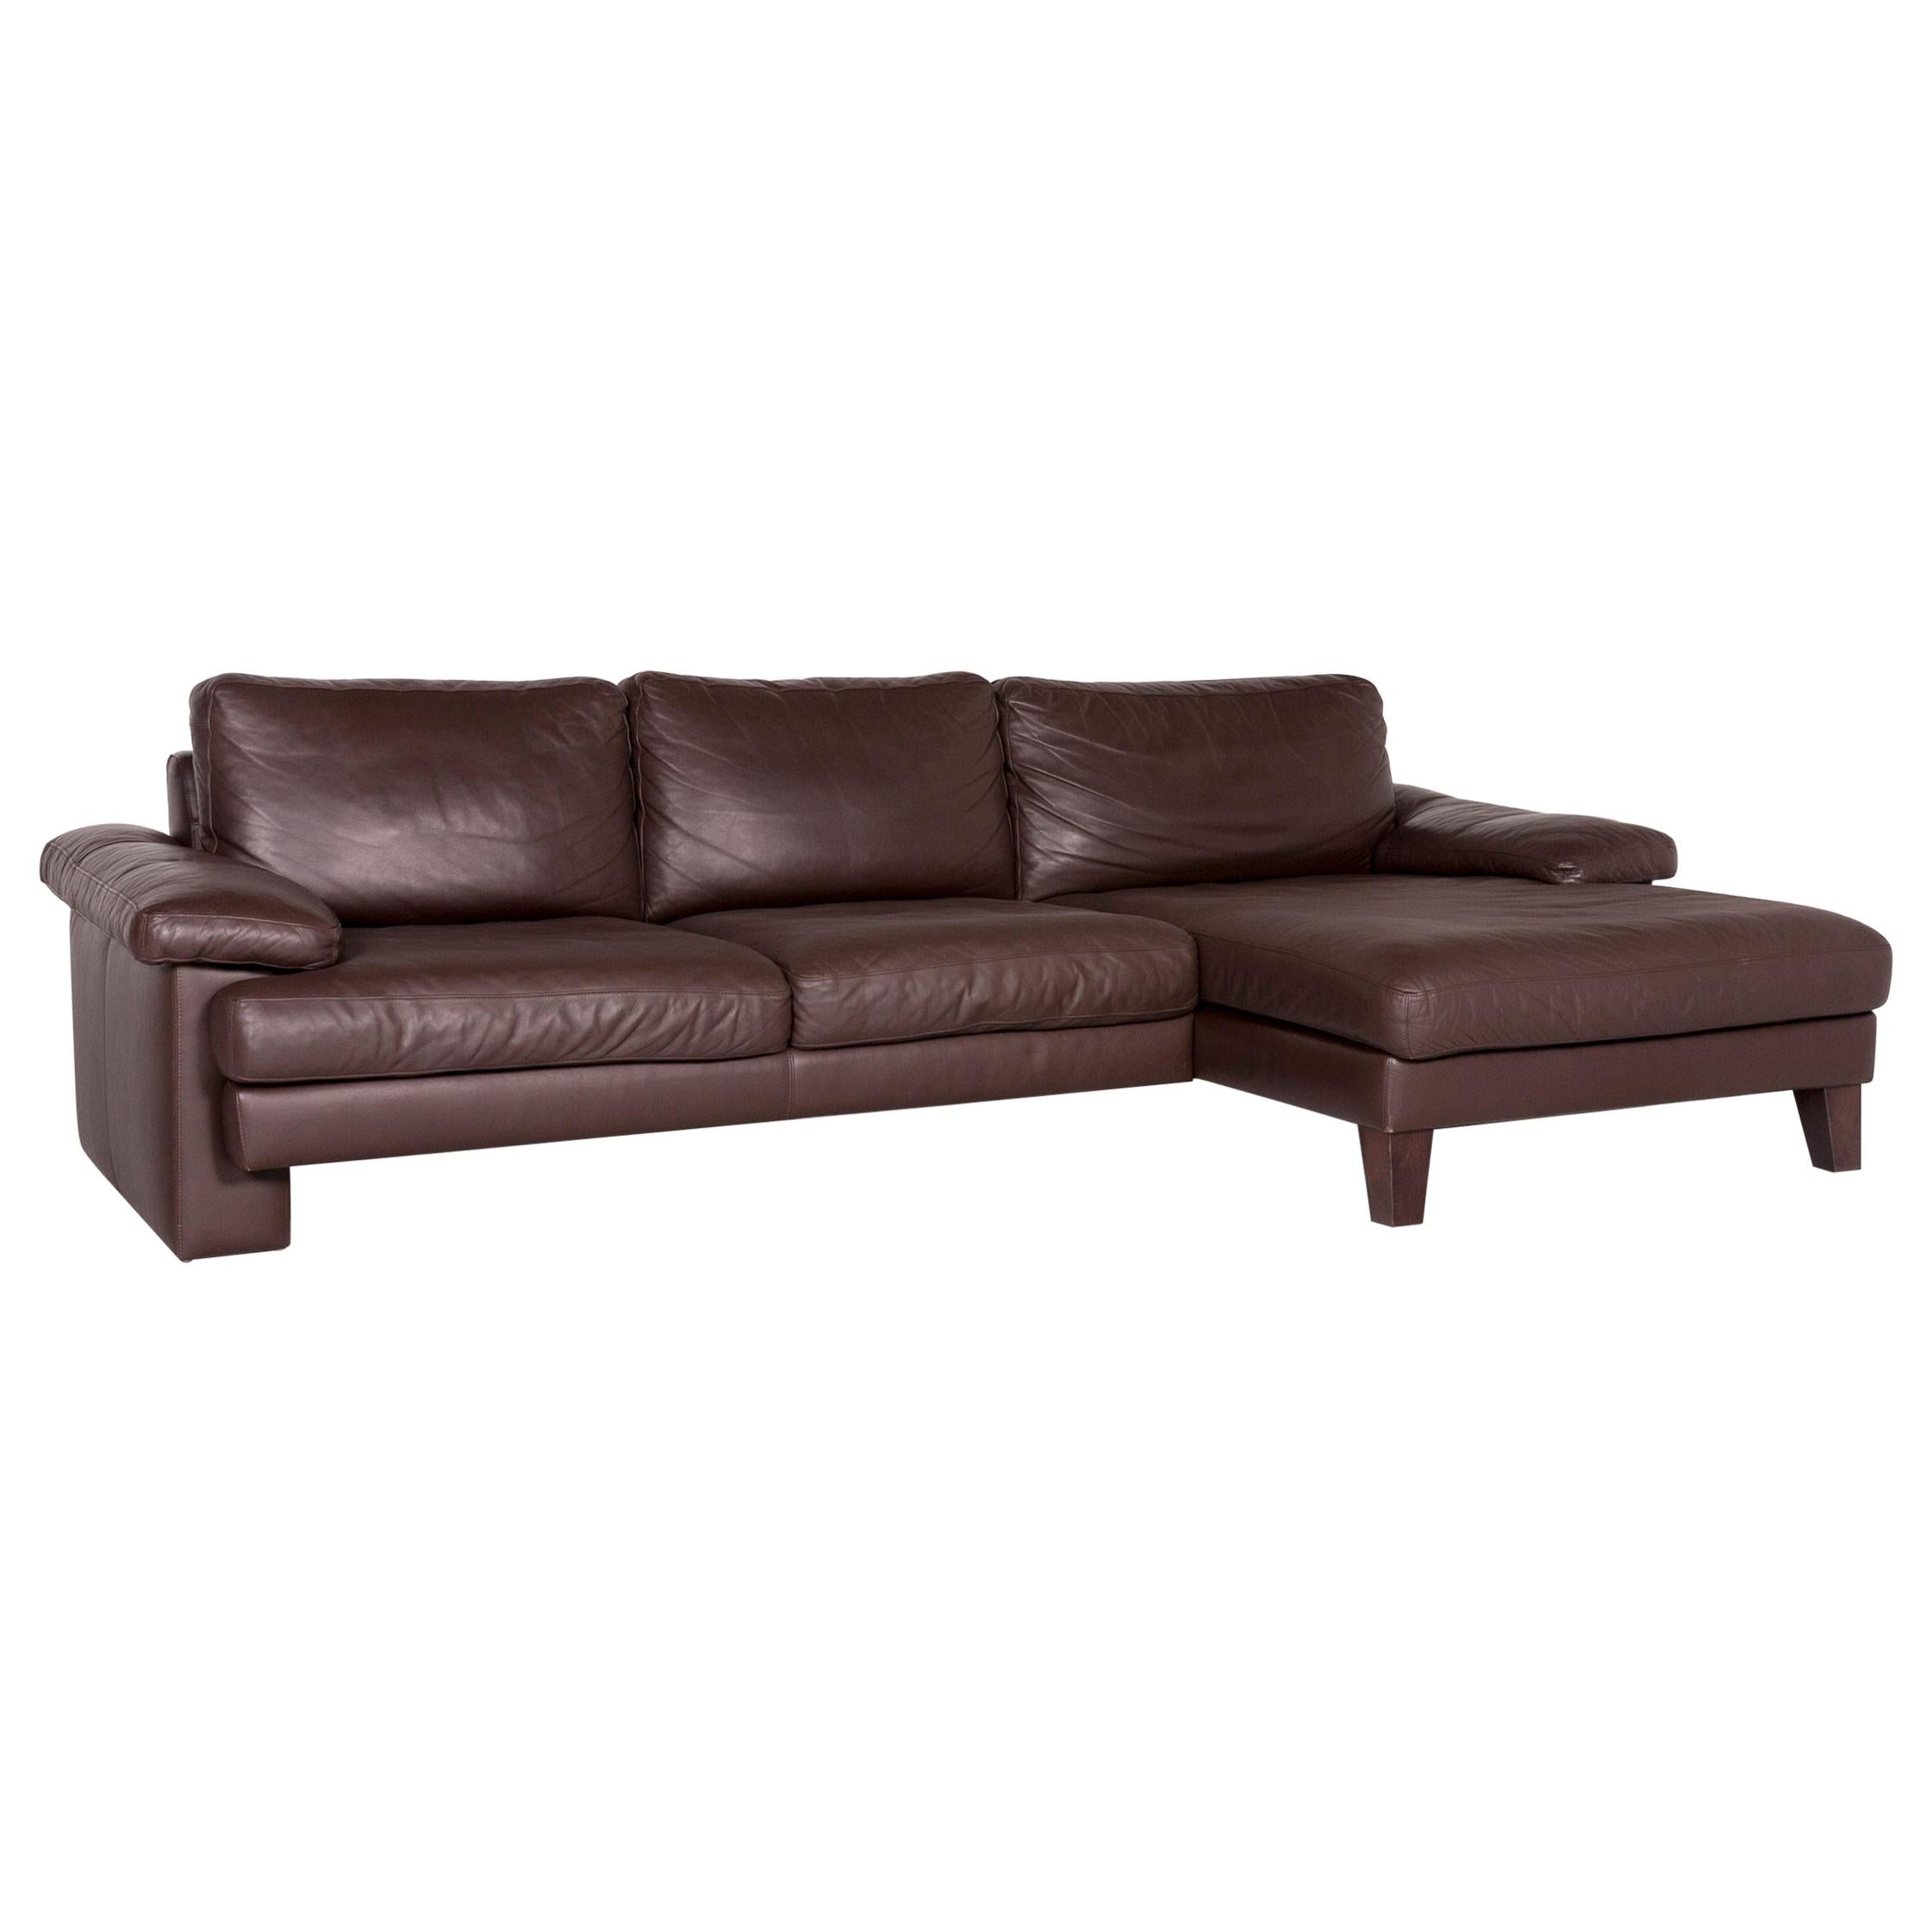 Machalke Leather Corner Sofa Brown Sofa Couch